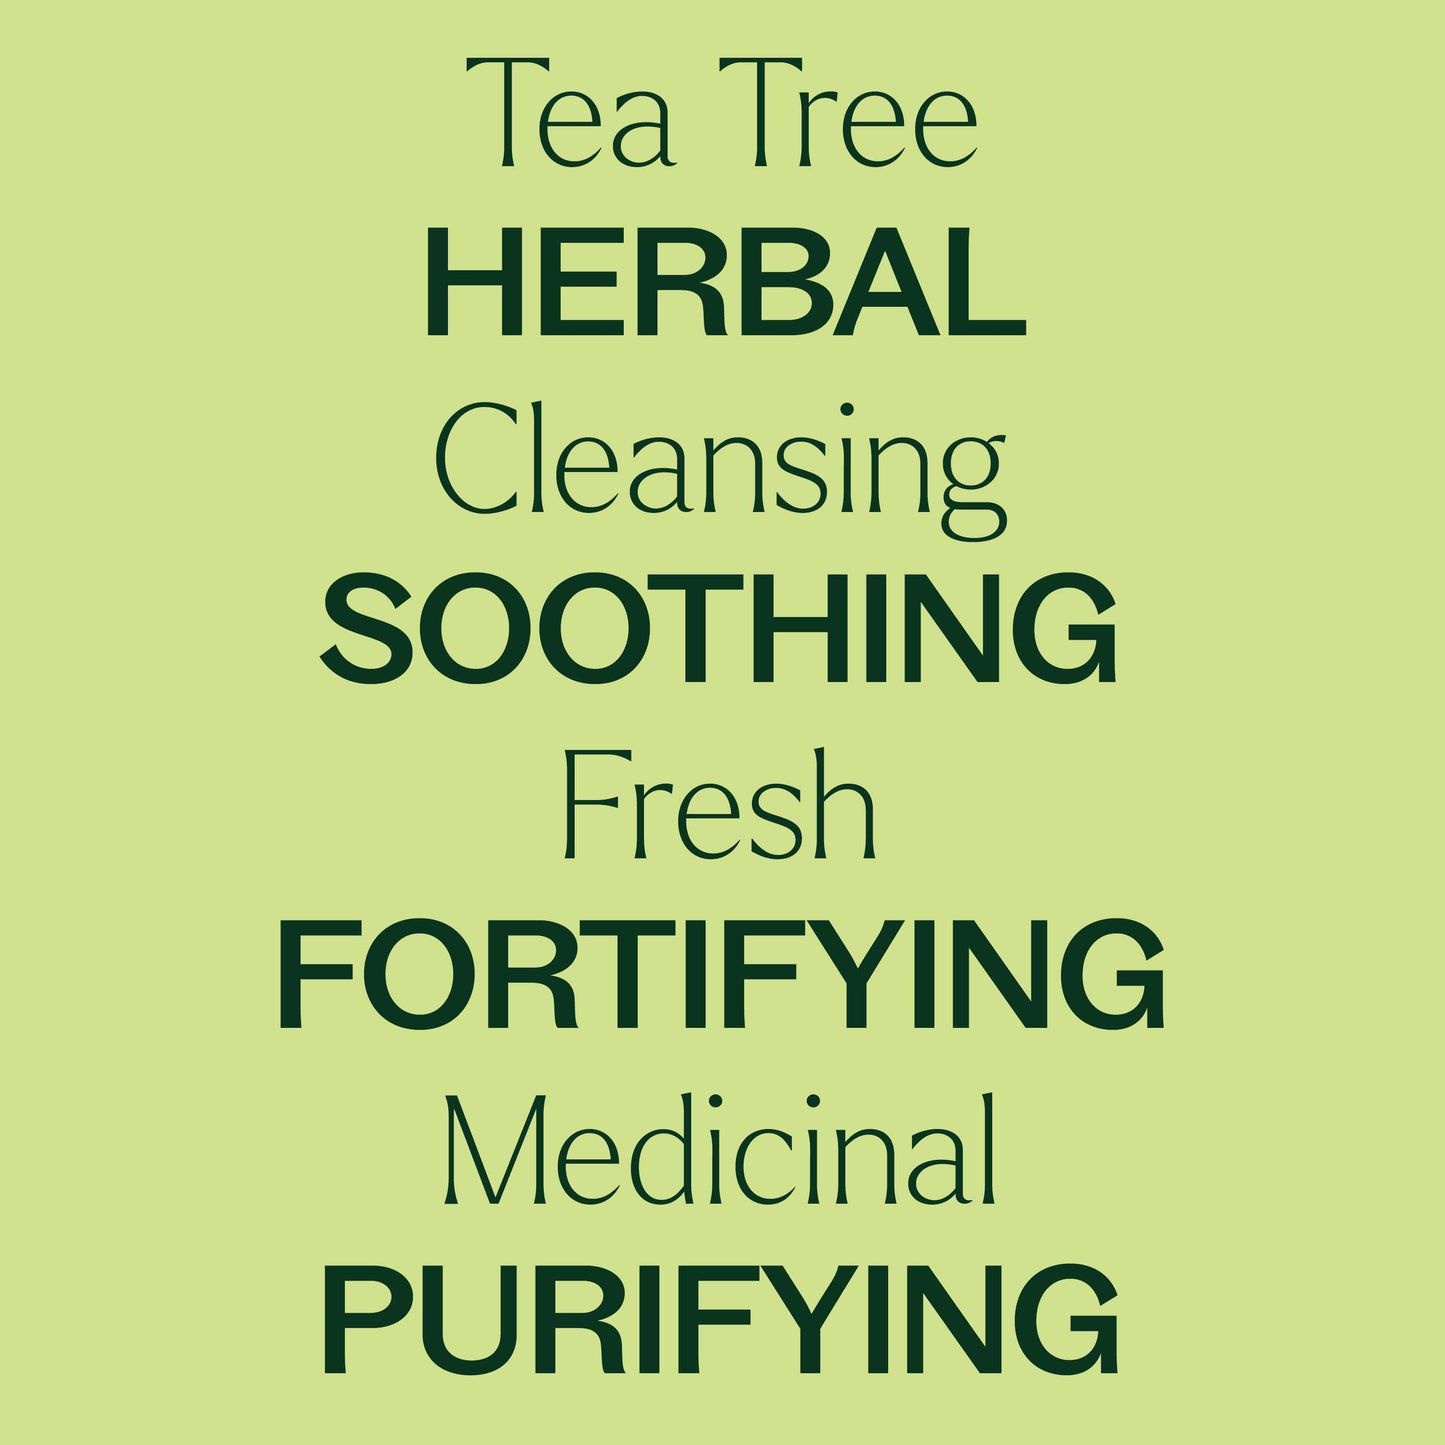 Organic Tea Tree Essential Oil is herbal, soothing, fortifying, purifying